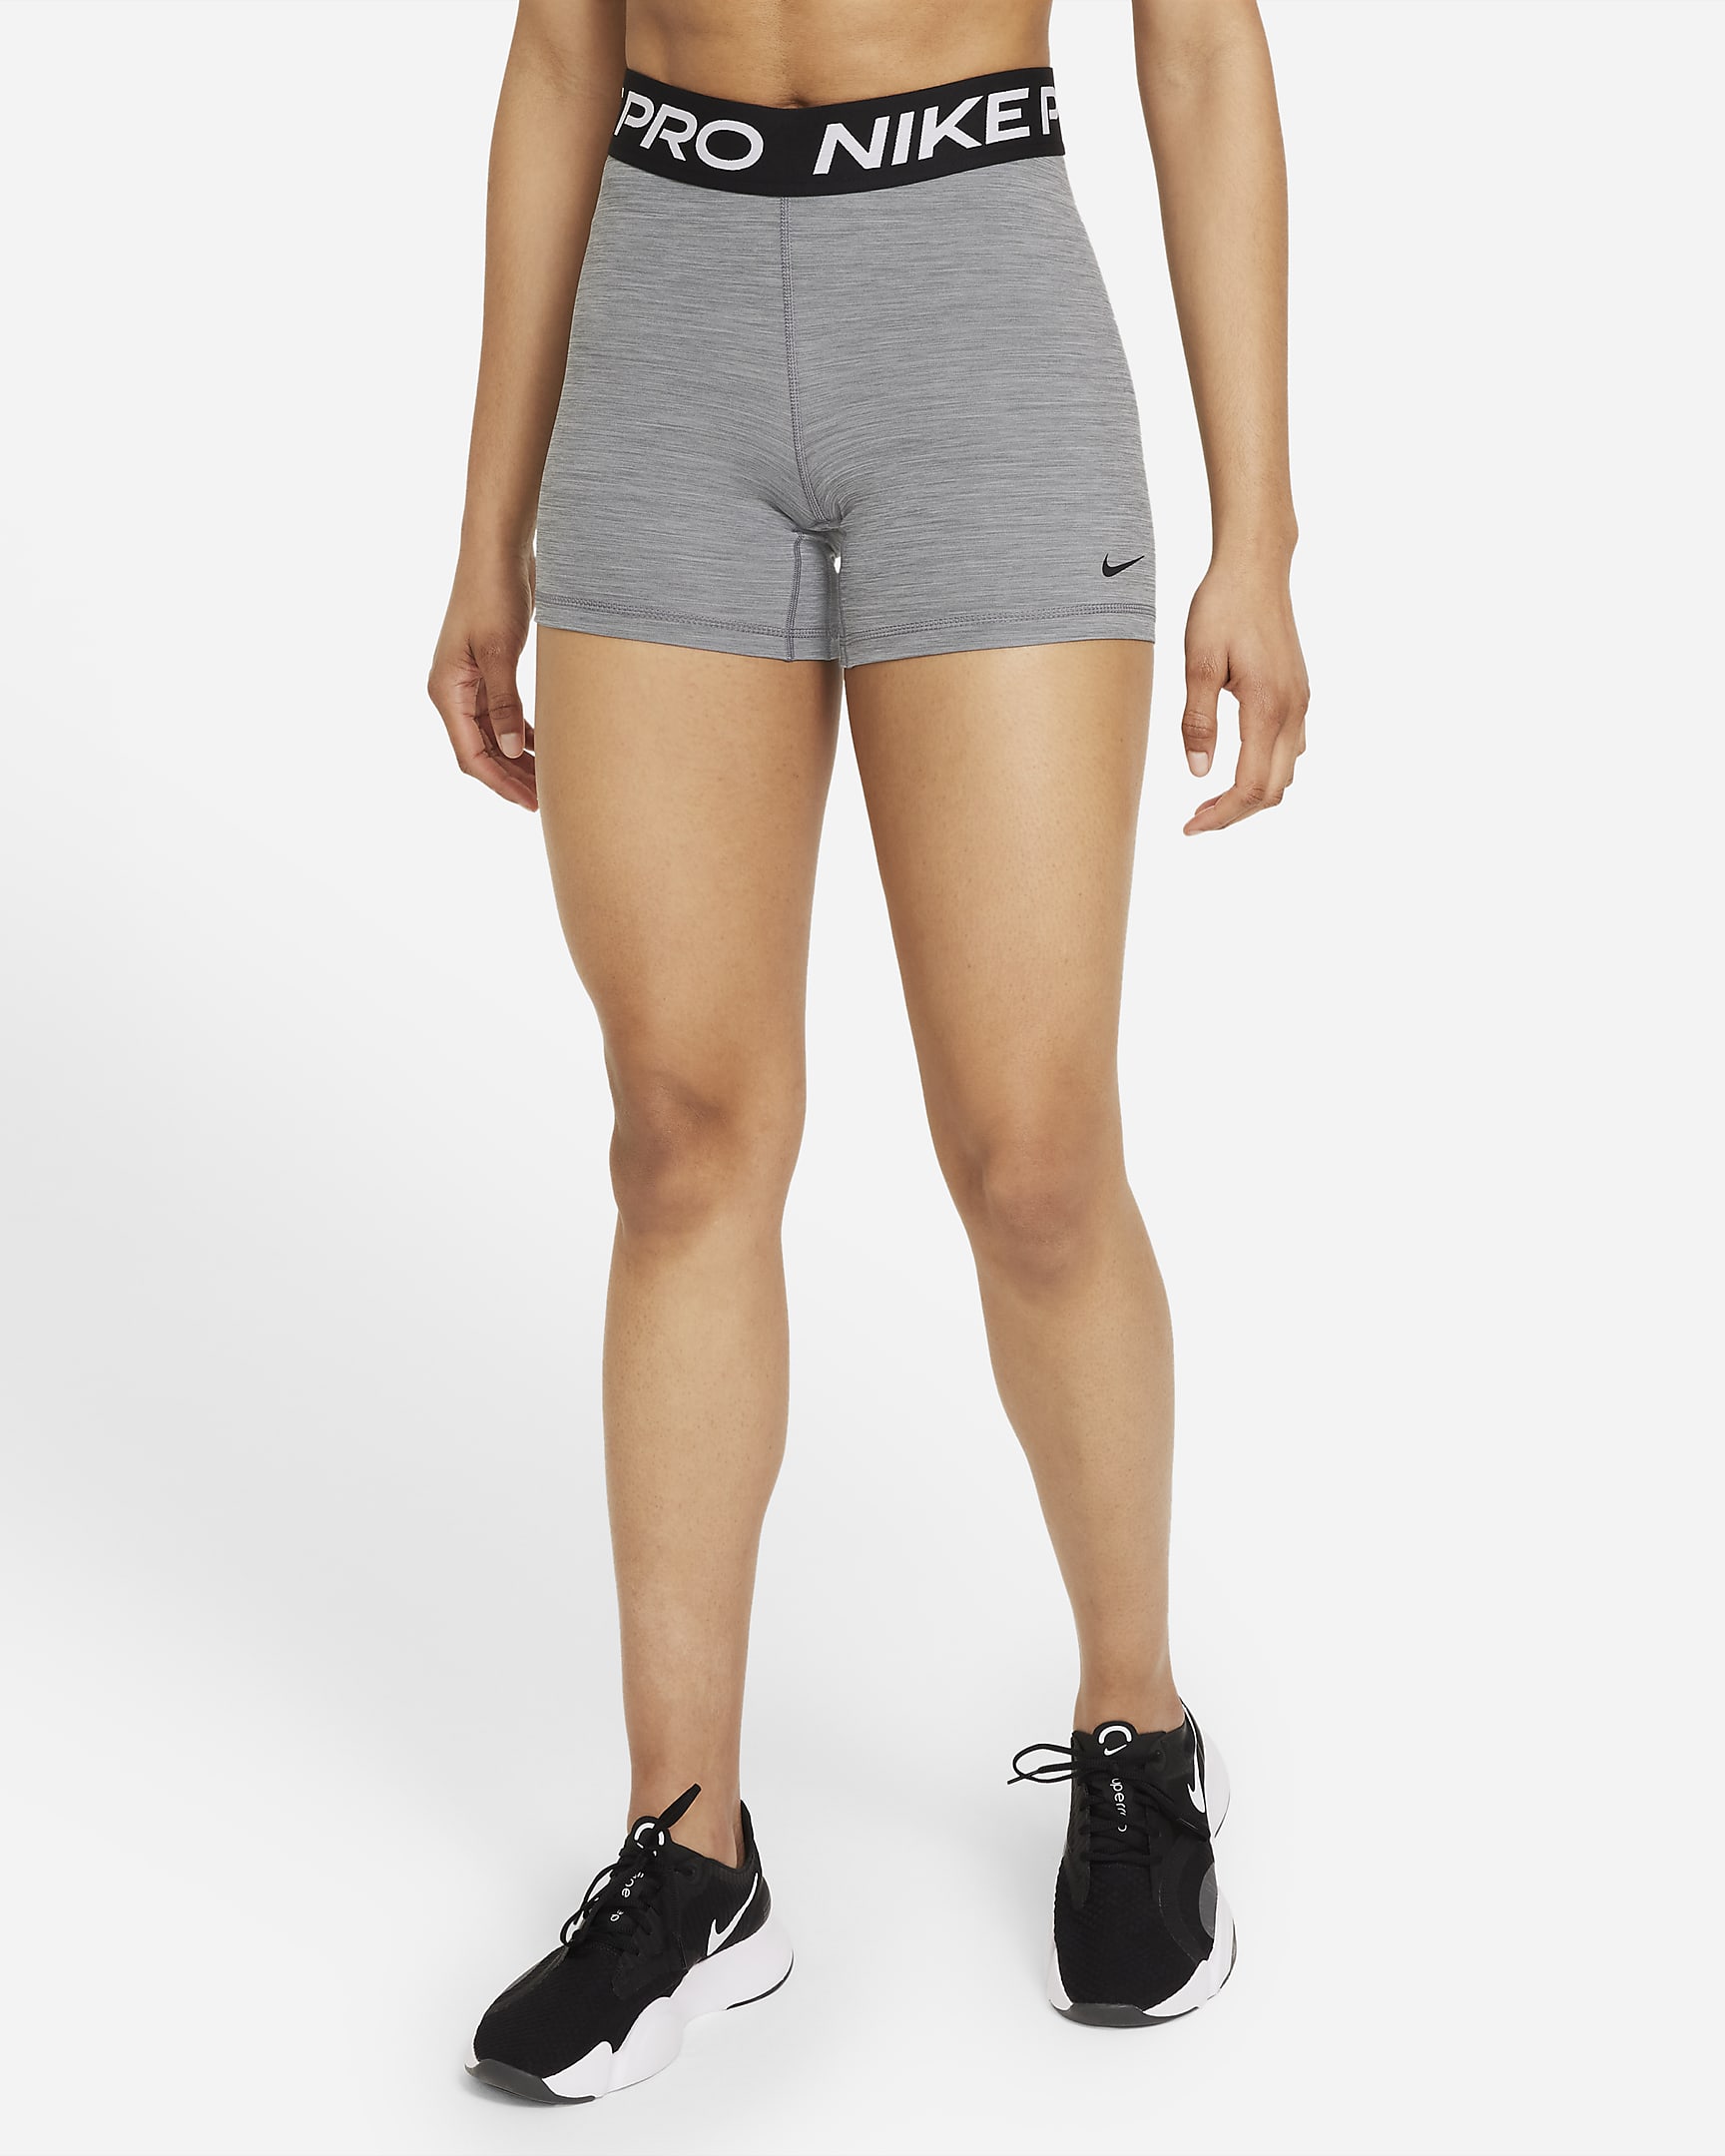 Nike шорты w NP 365 short 5in. Nike Pro Dri-Fit women's 18cm (approx.) High-Rise Training shorts. Athletic Pro шорты серые. Заказать белые шорты Nike Pro 365 женские.